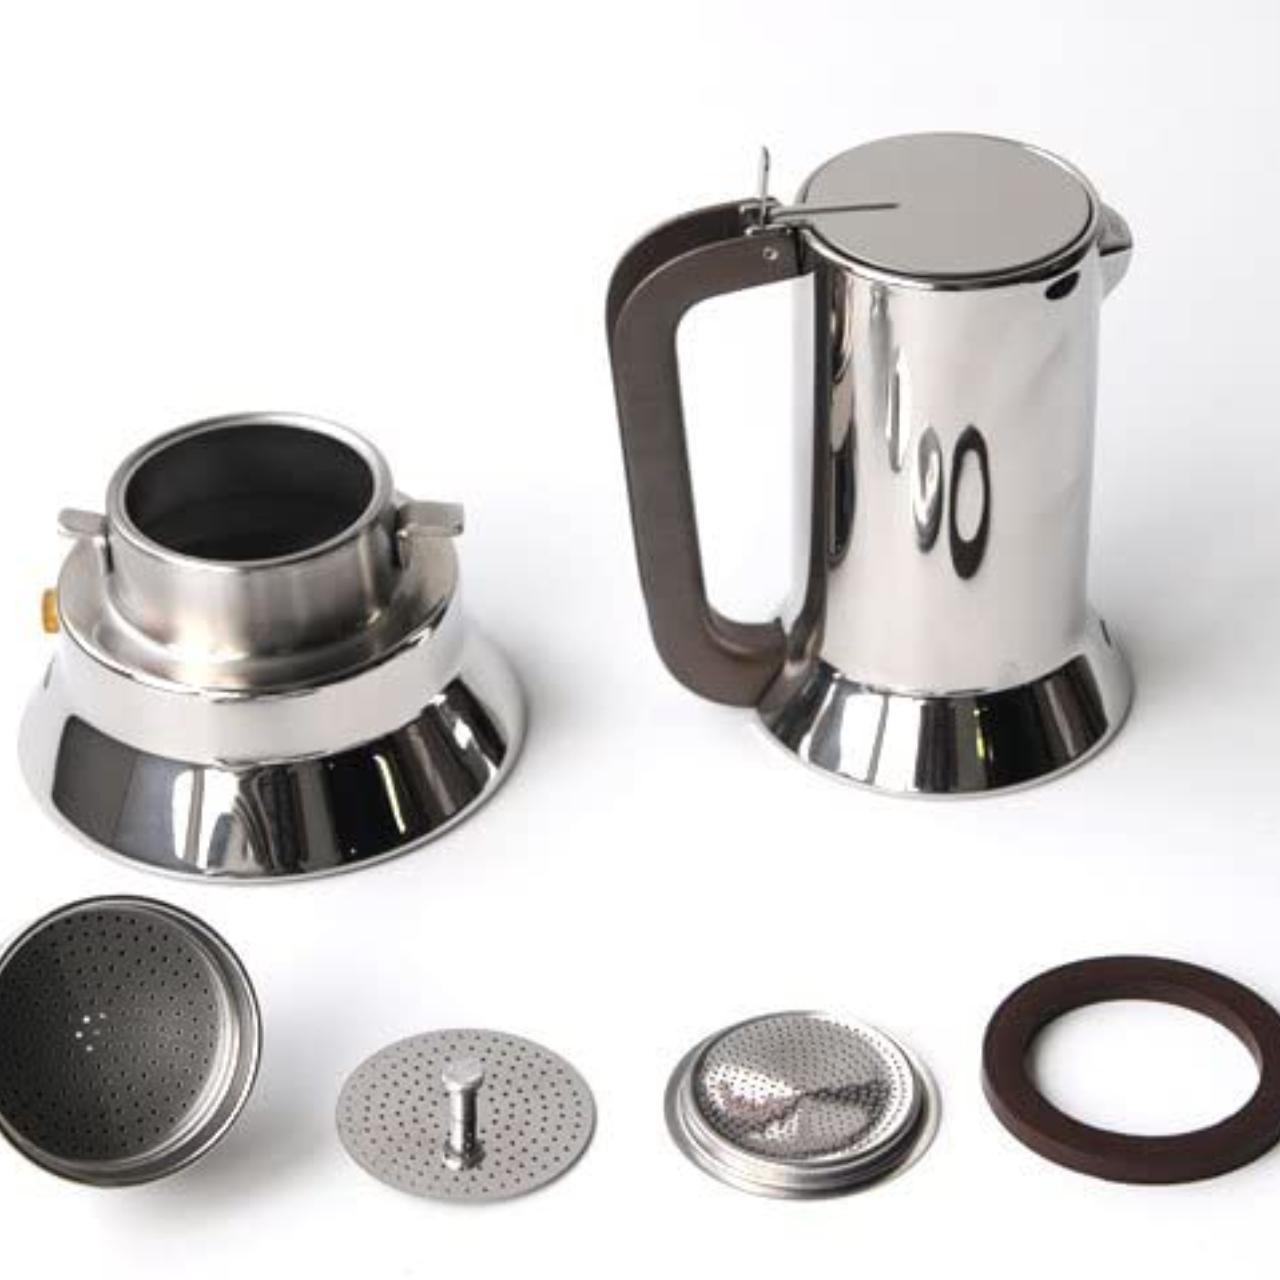 Product Image 2 - Espresso Coffee Maker Size: 3